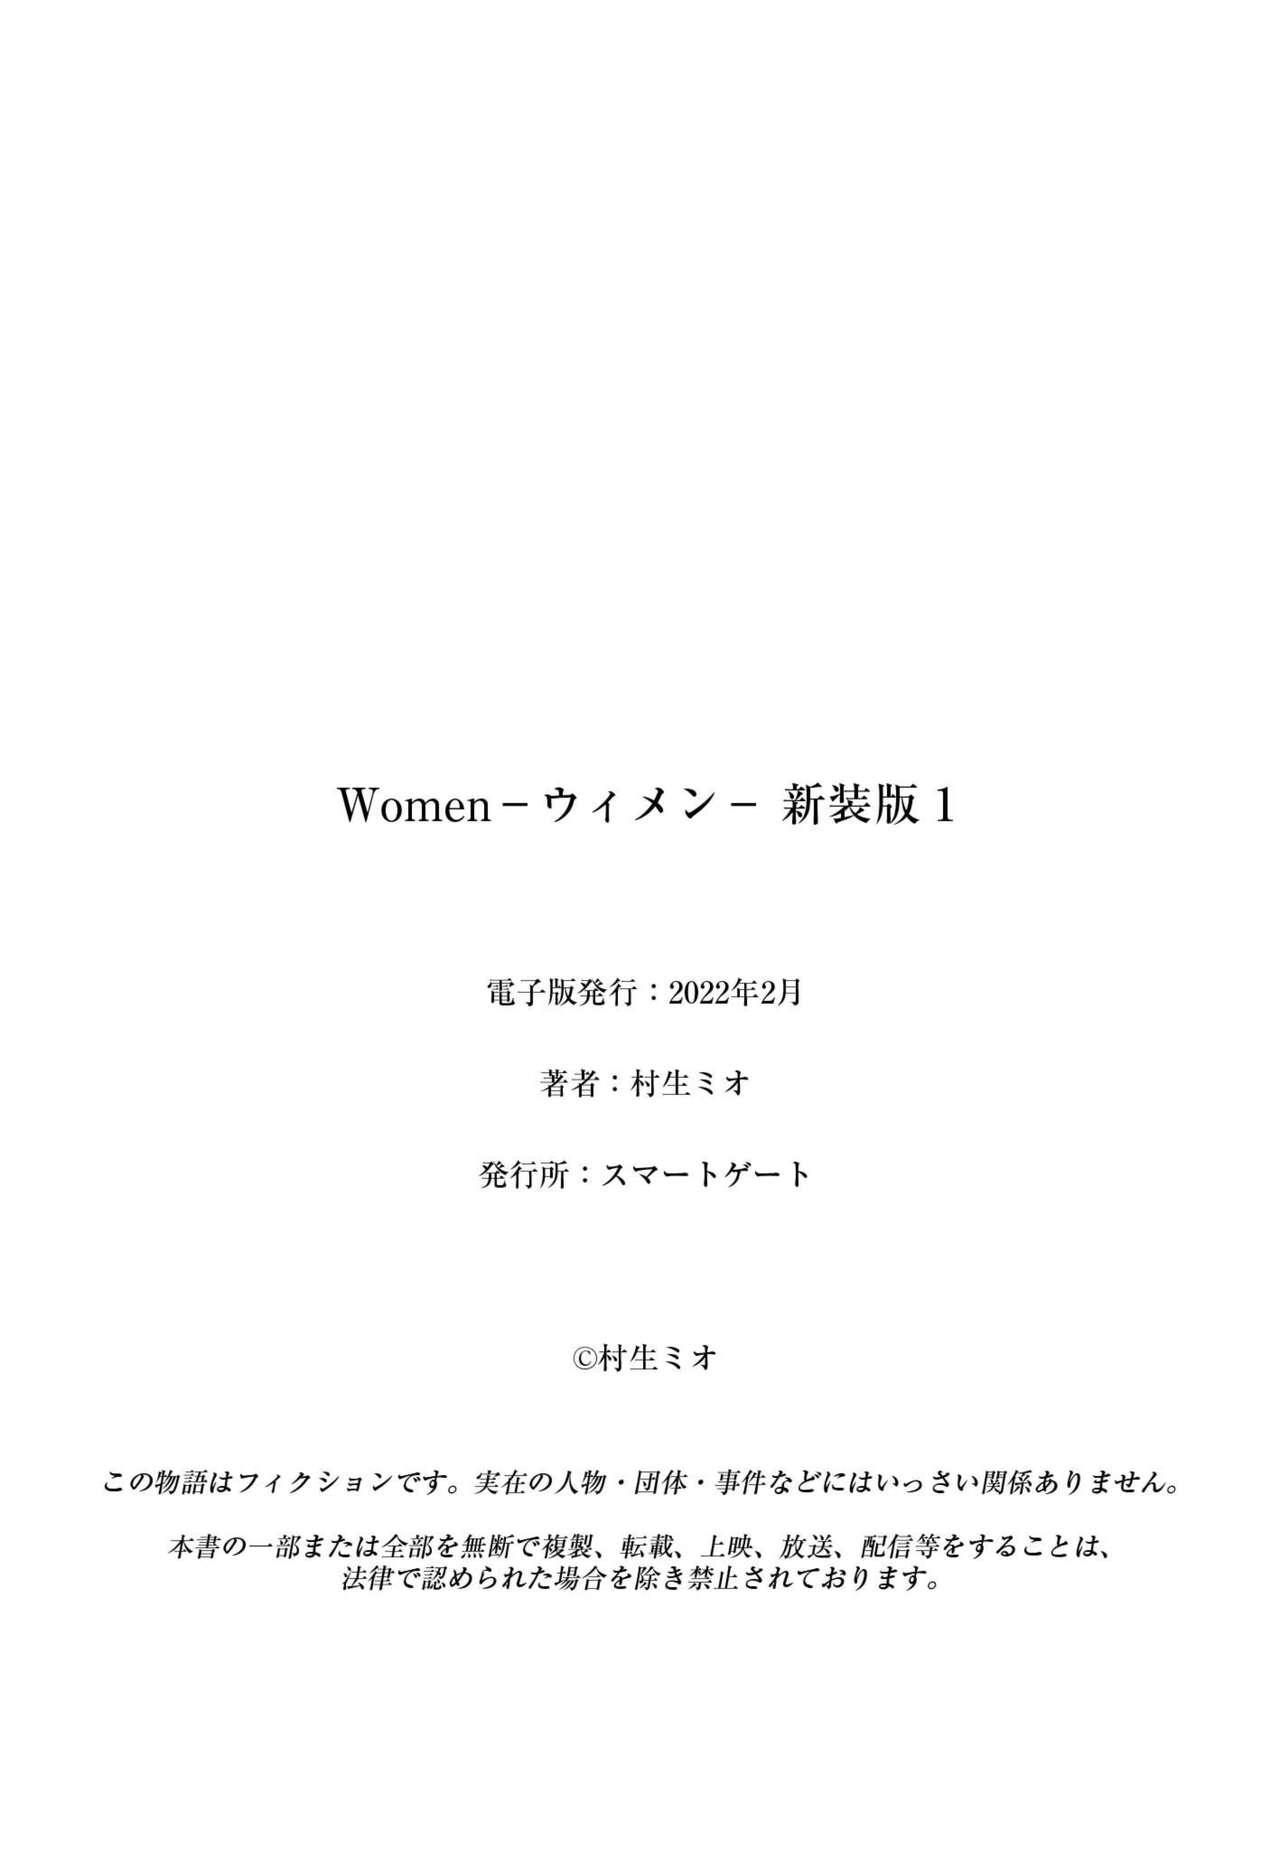 Women － Wimen － Shinsōban 1 211